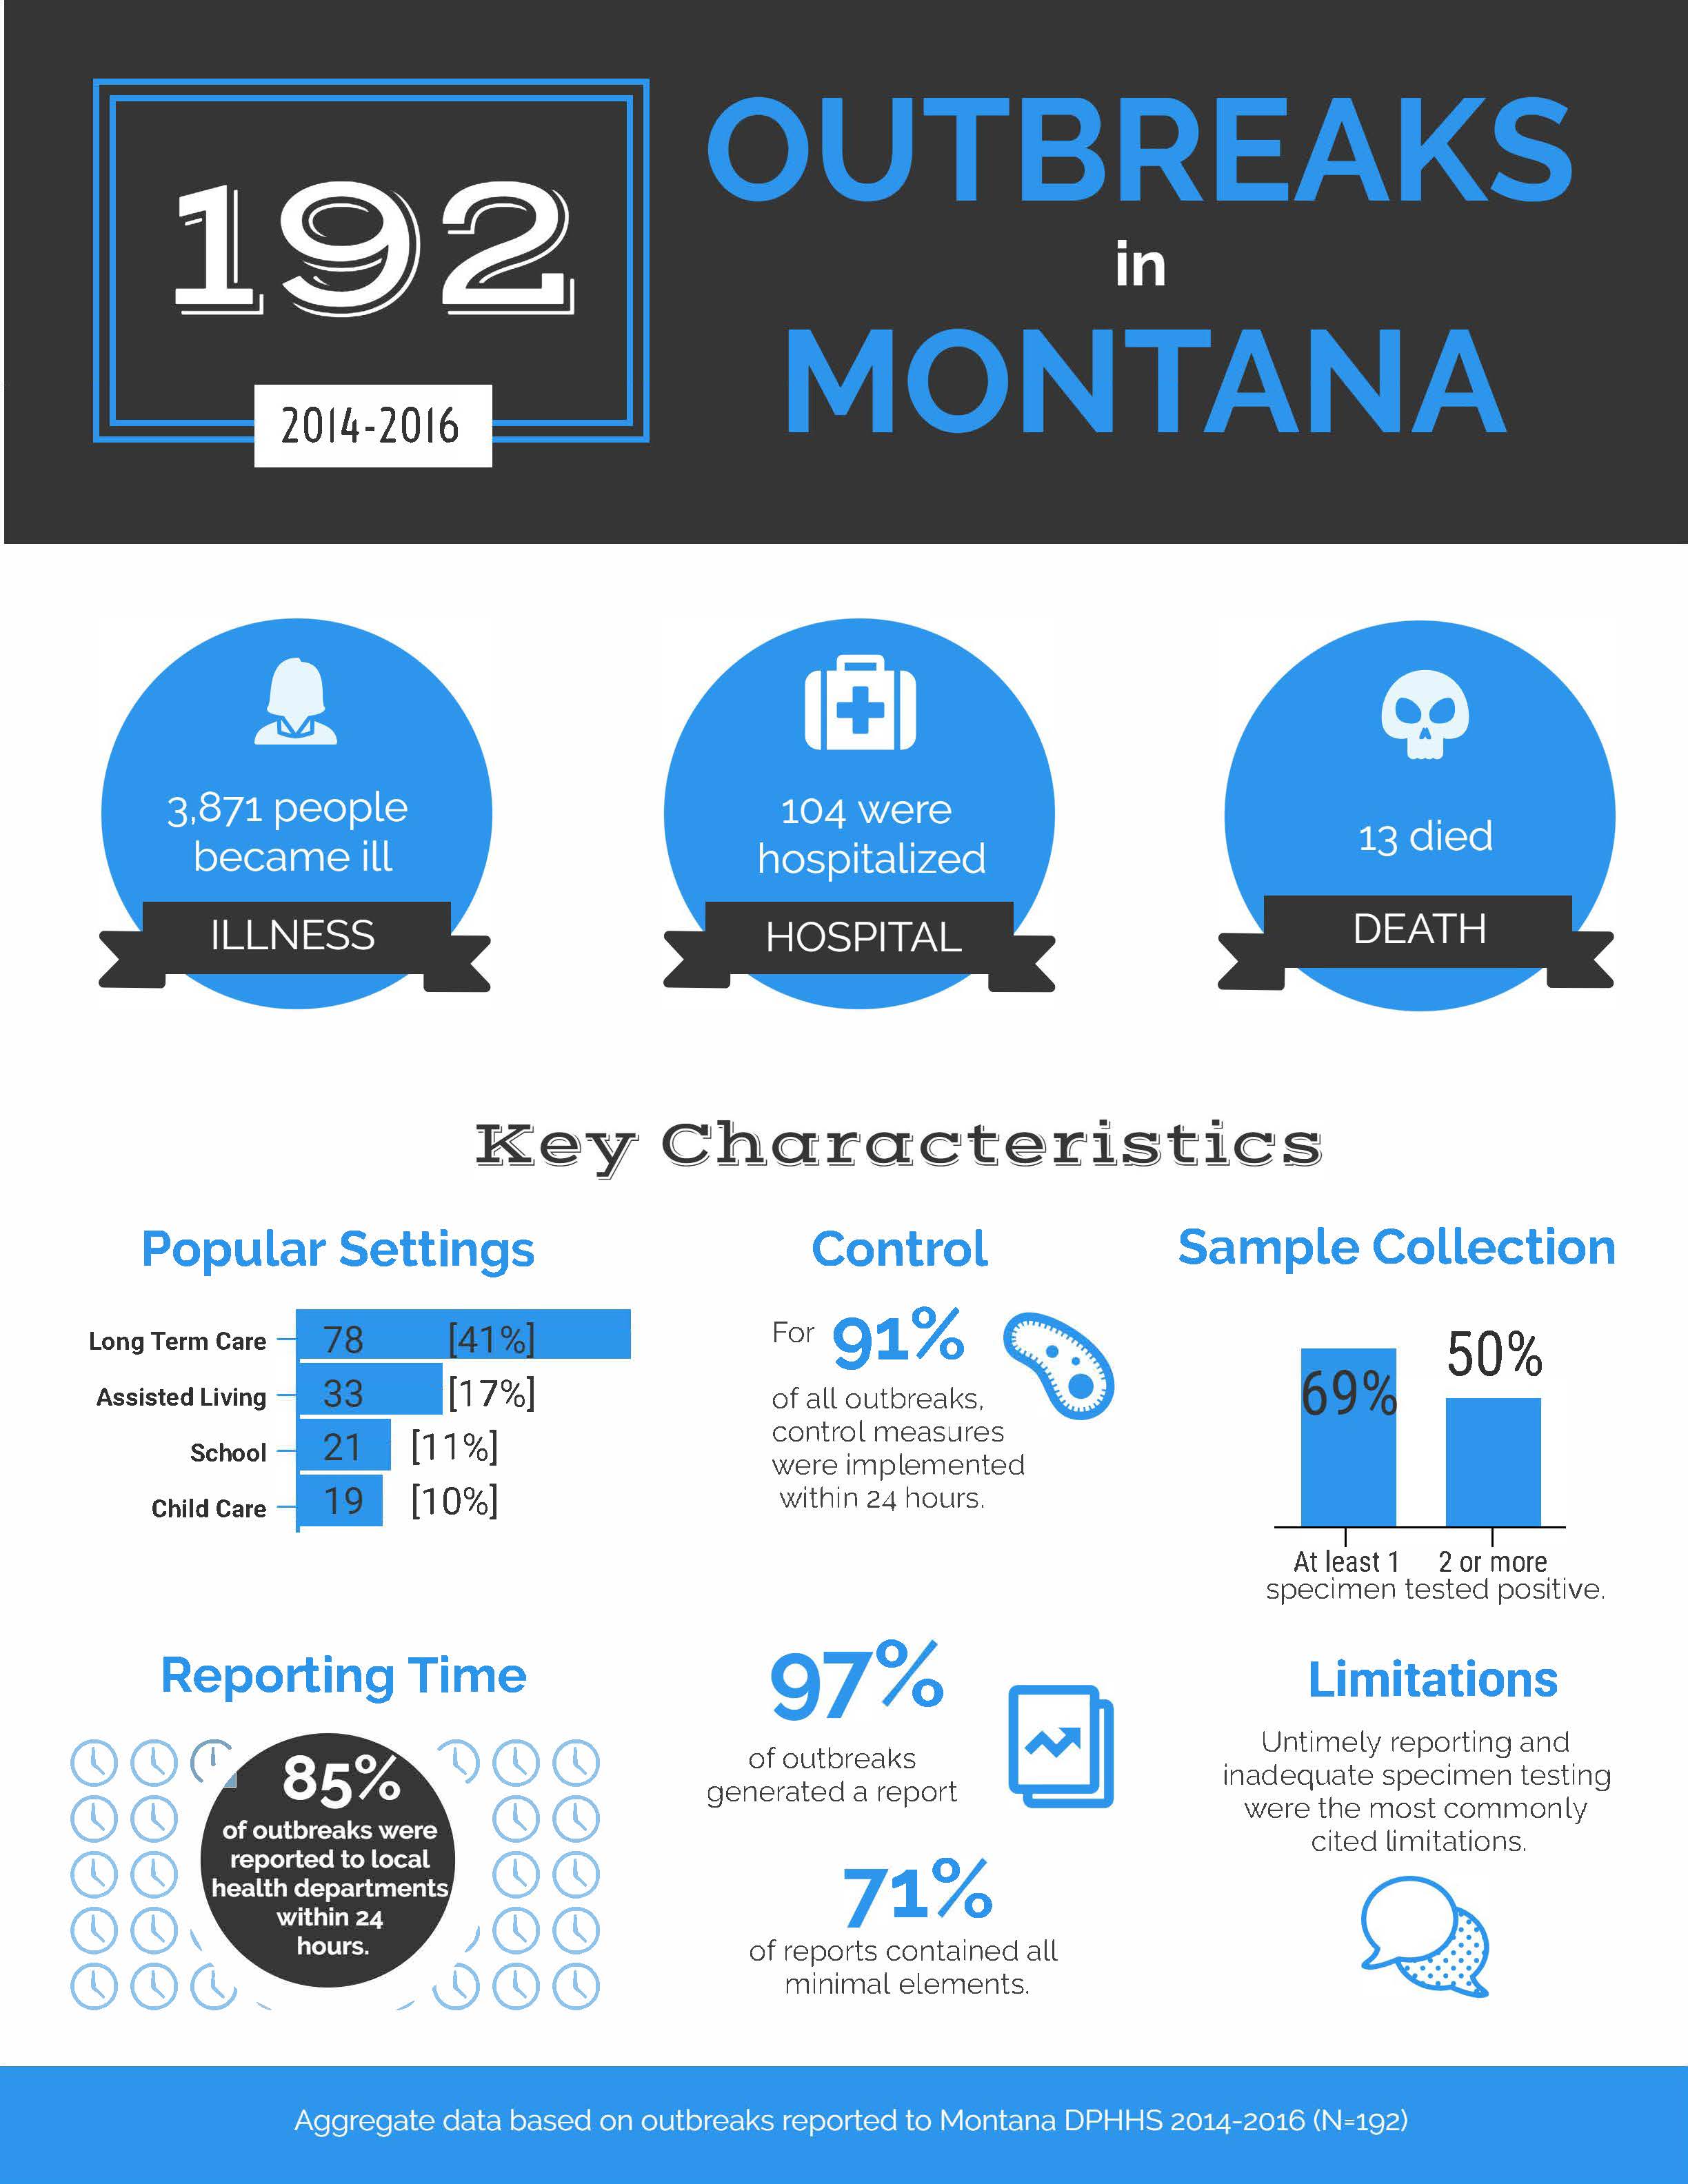 Outbreaks in Montana, 2013-15